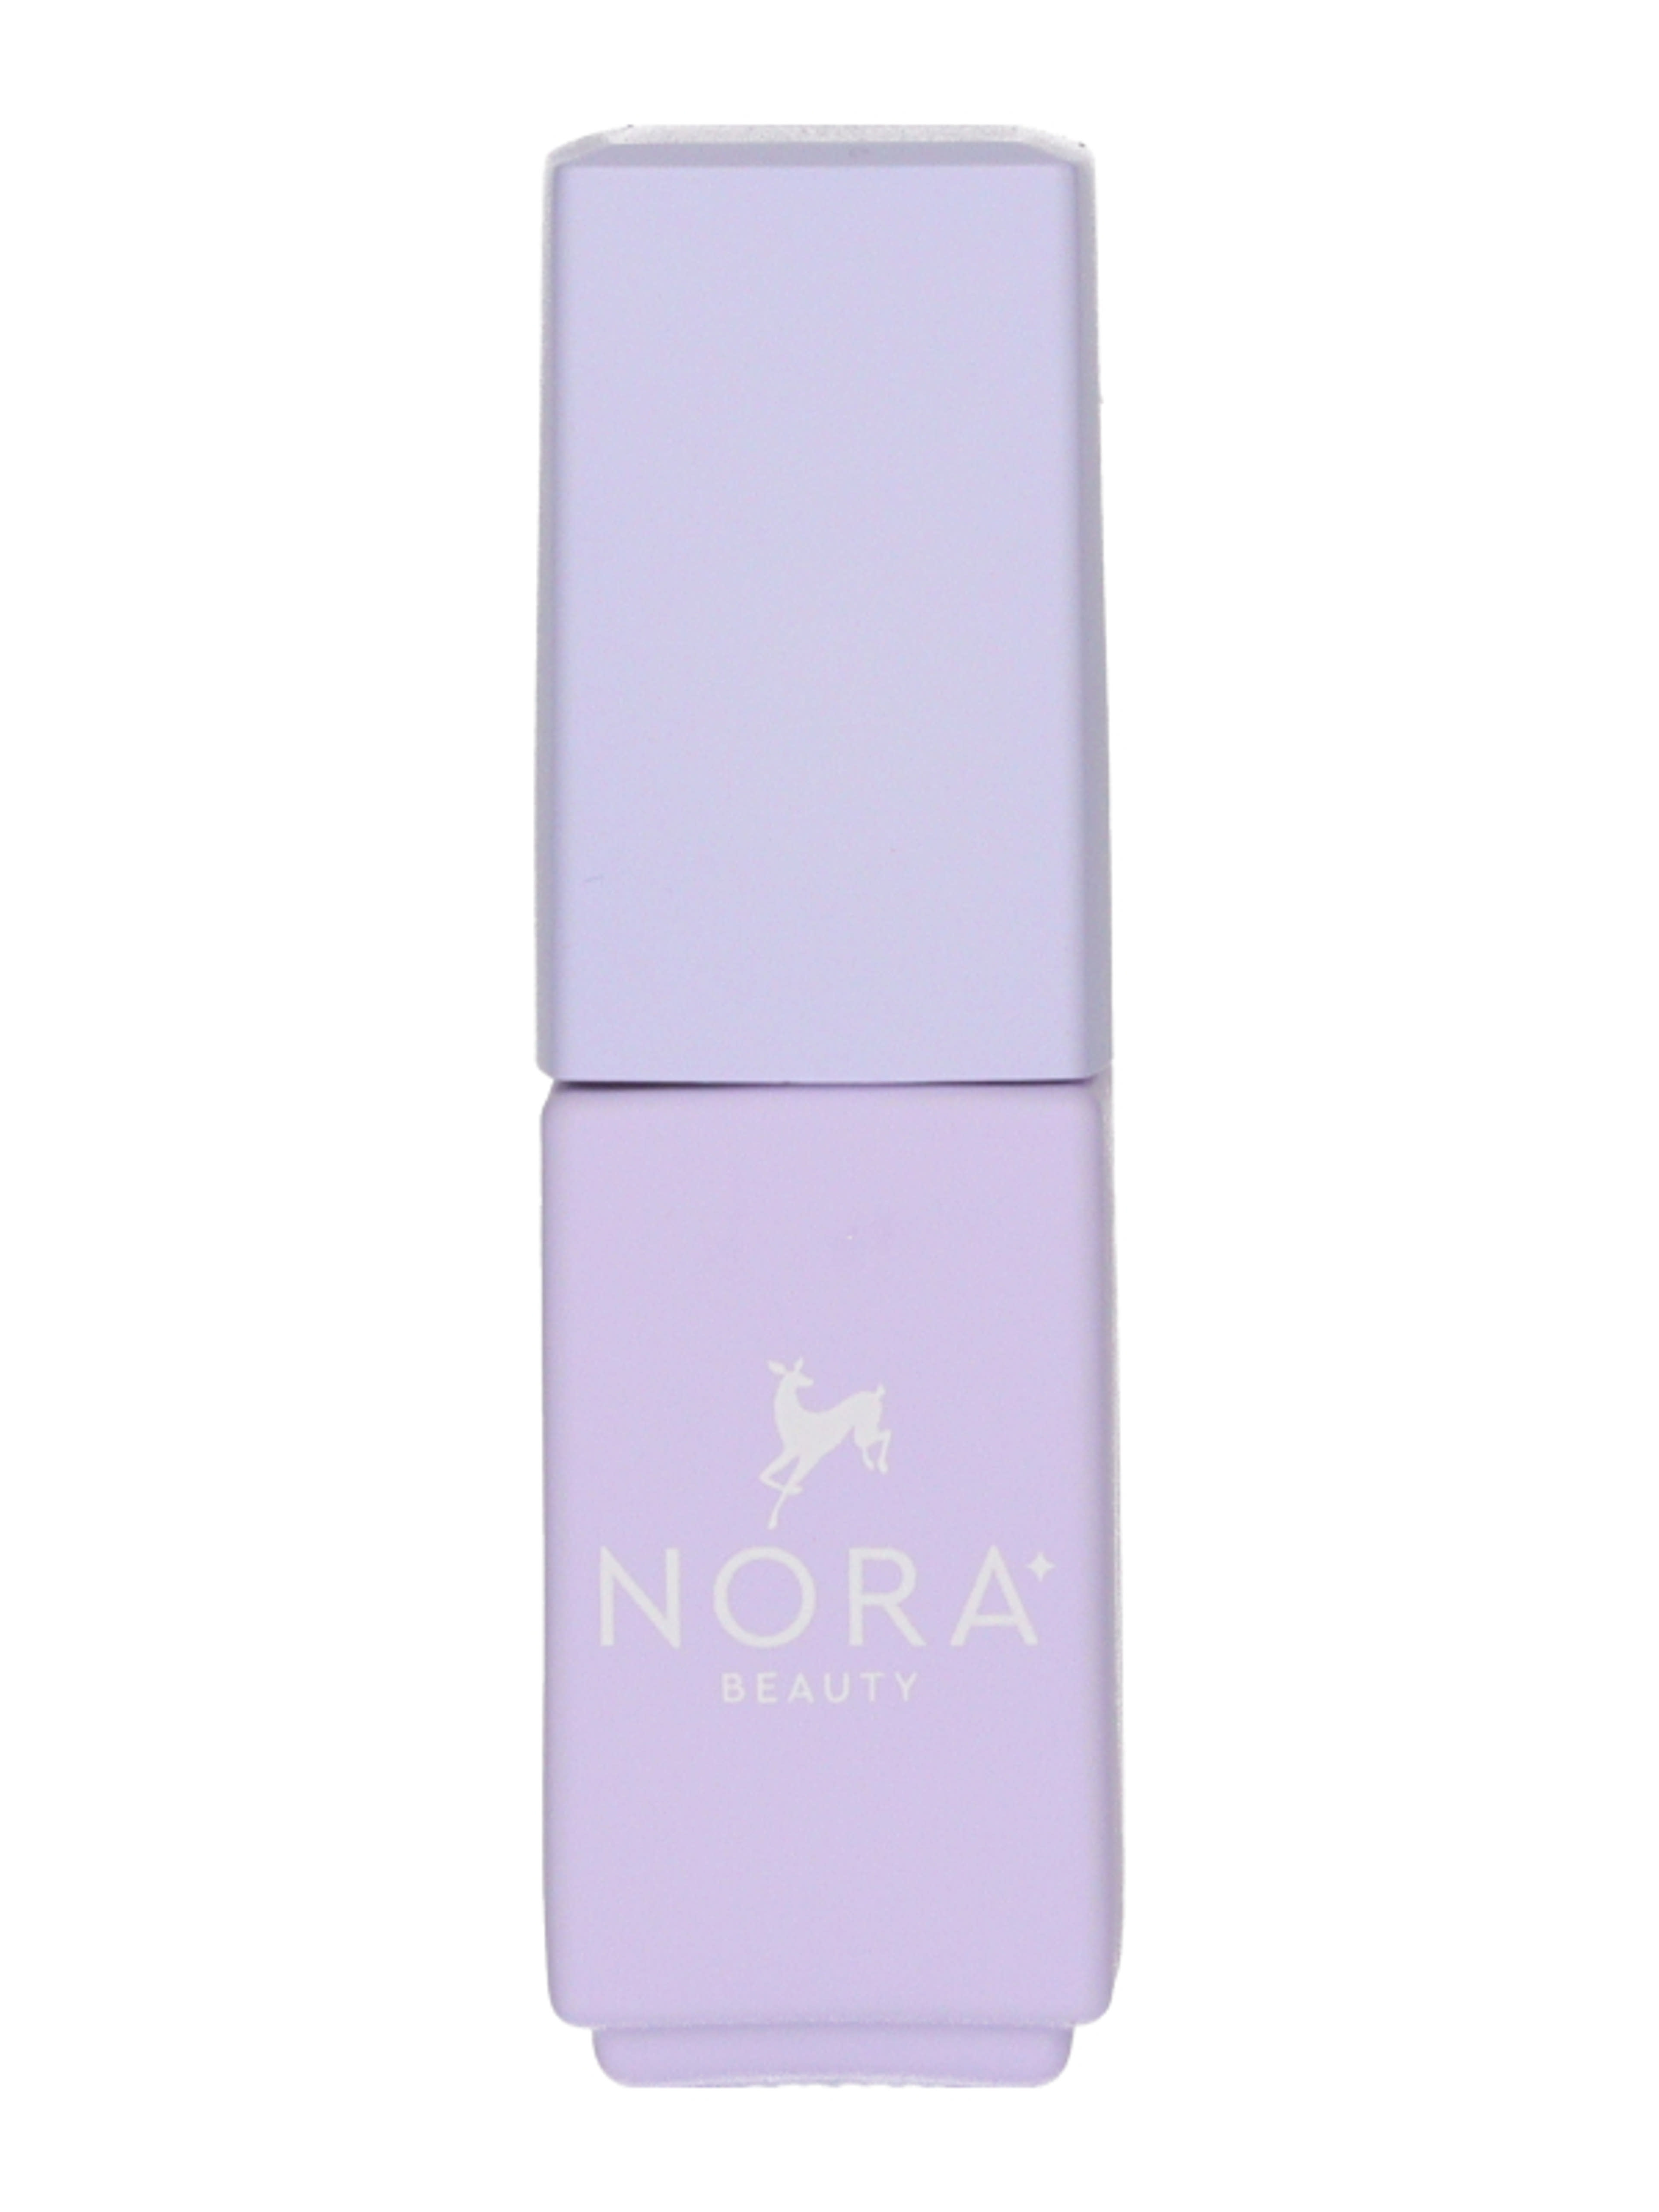 Nora Beauty UV lakkzselé /tb-01 simply red - 1 db-3